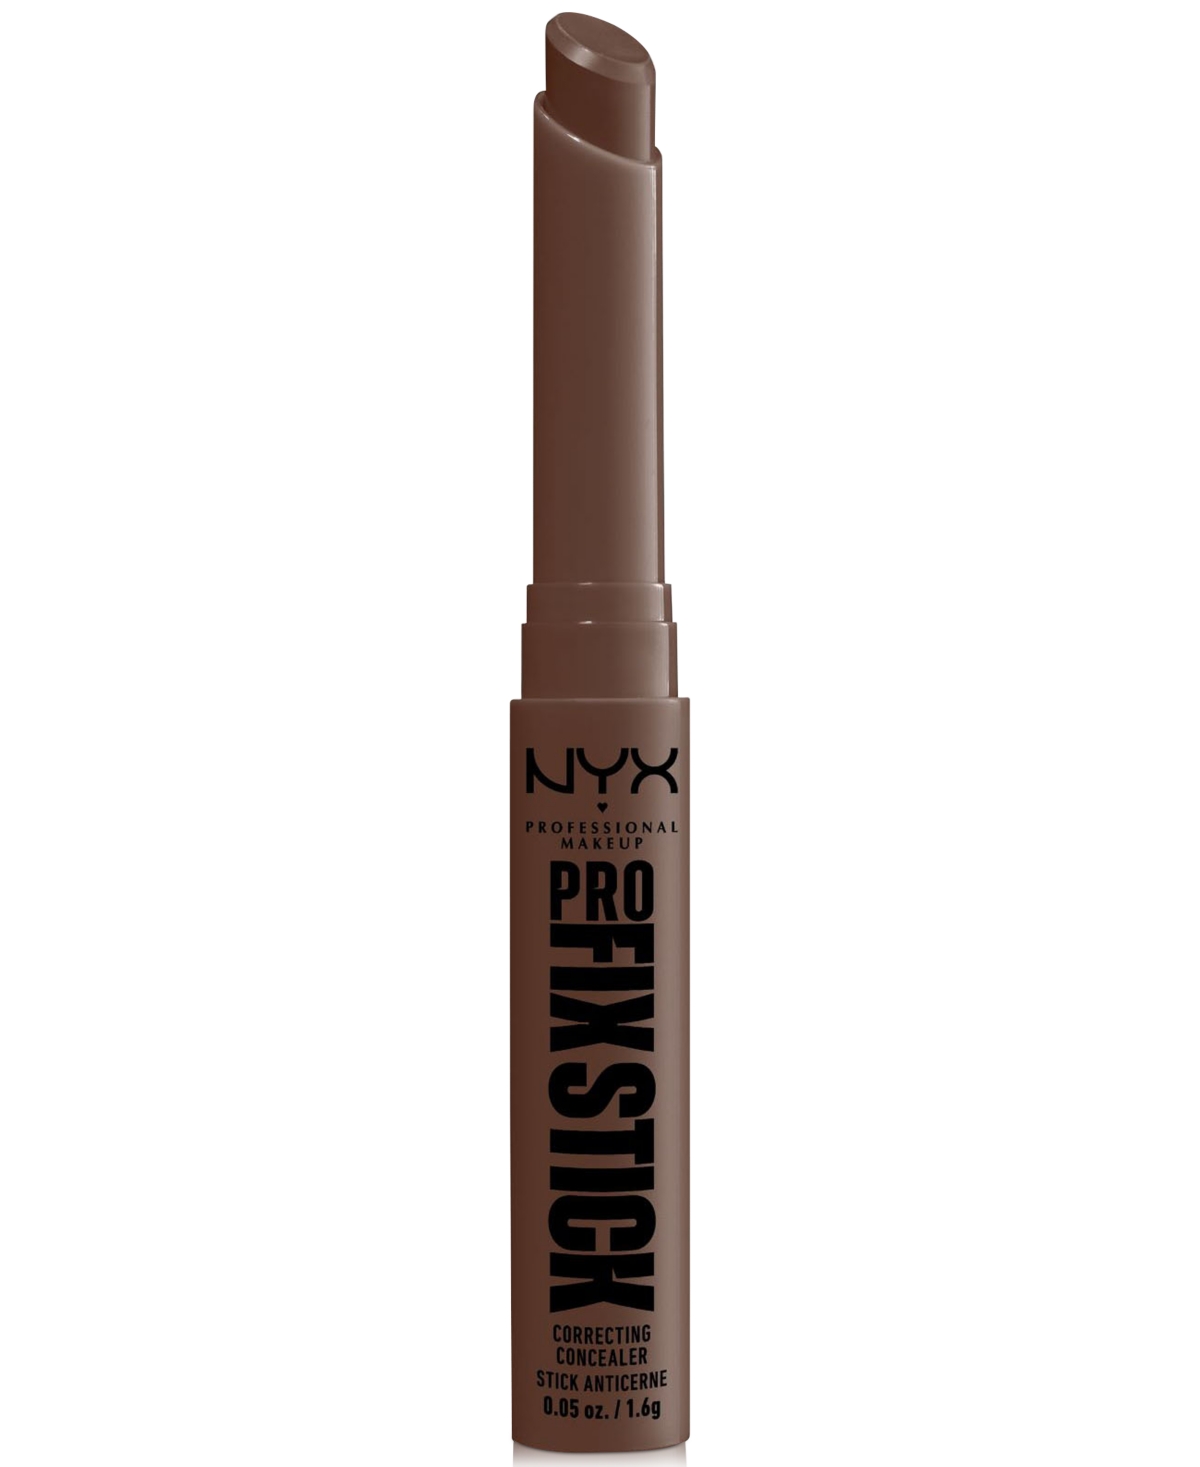 Nyx Professional Makeup Pro Fix Stick Correcting Concealer, 0.05 Oz. In Deep Walnut